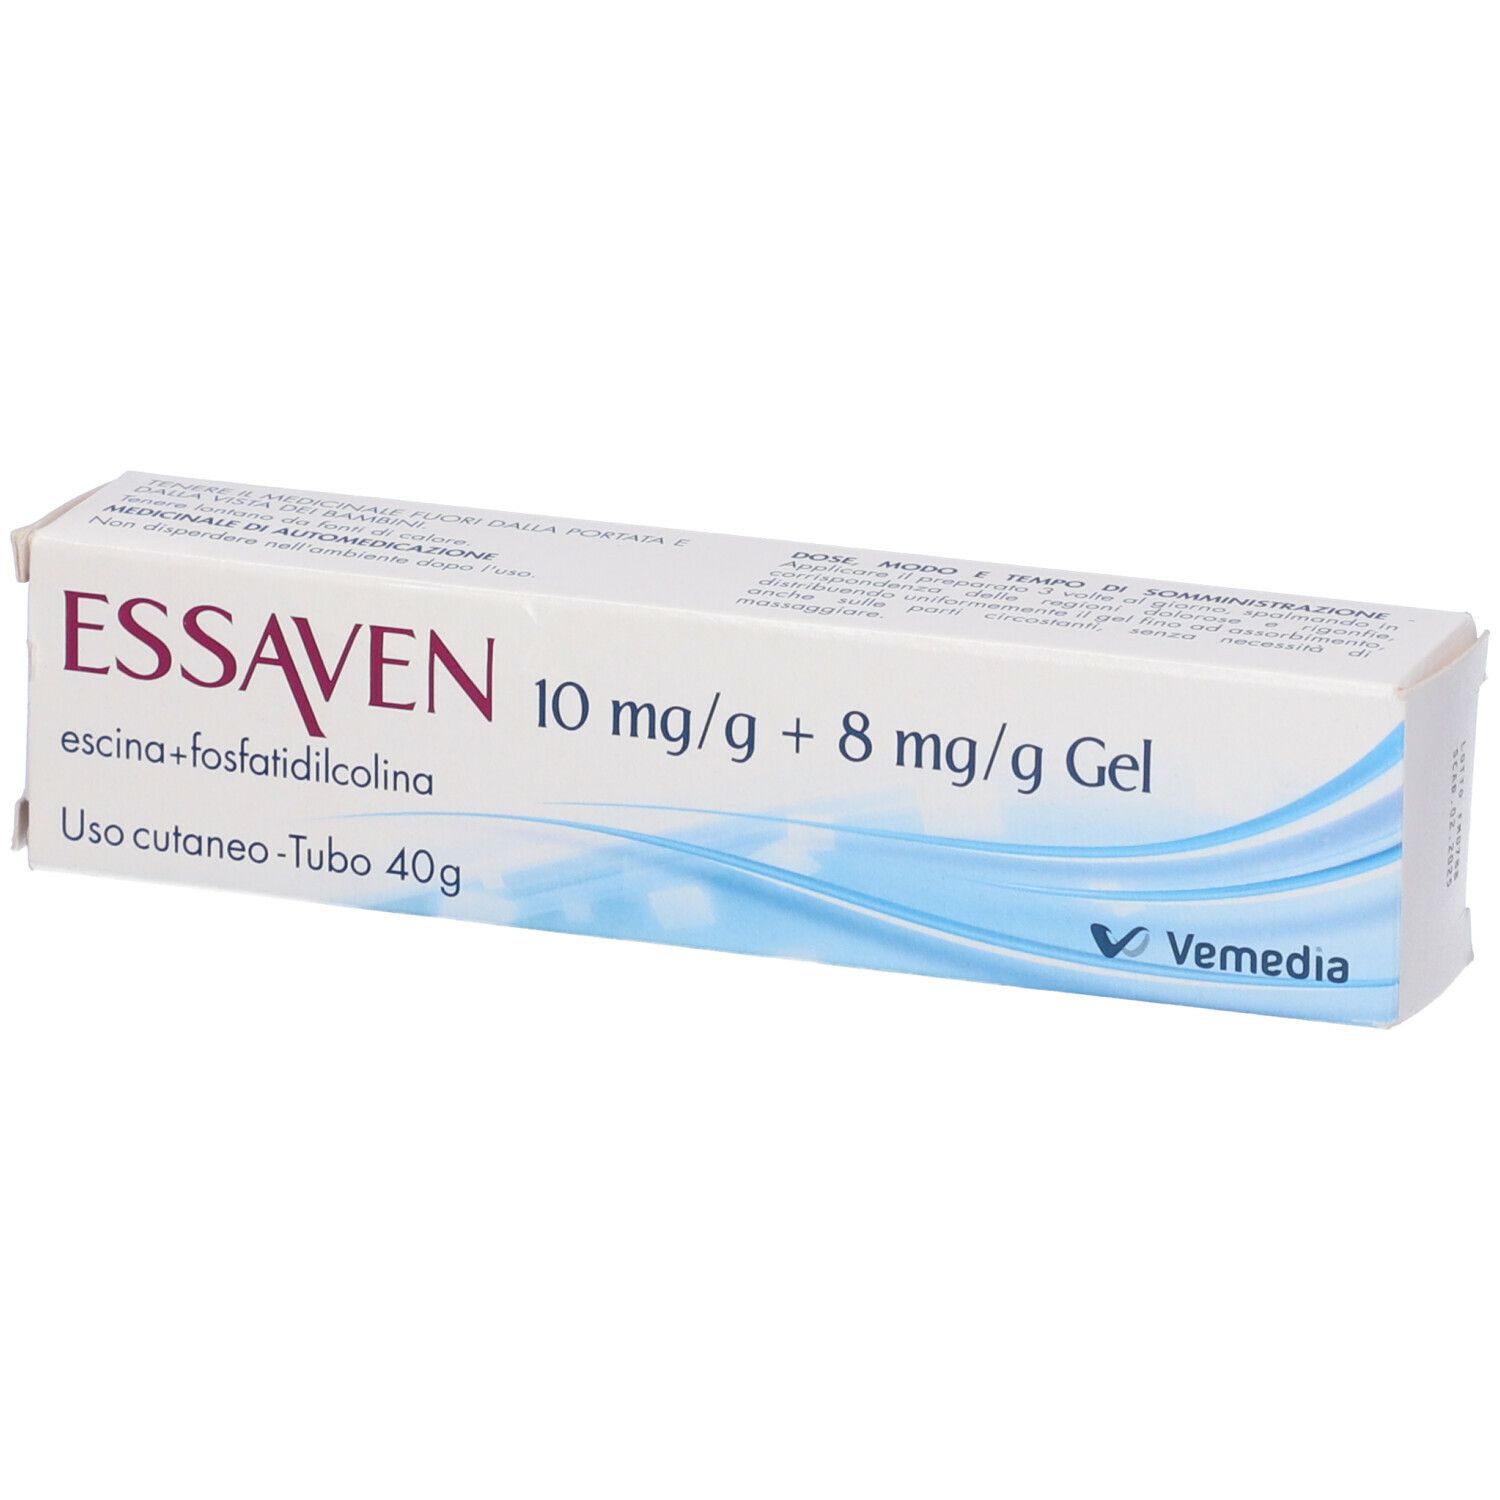 ESSAVEN 10 mg/g + 8 mg/g Gel Tubo 40g